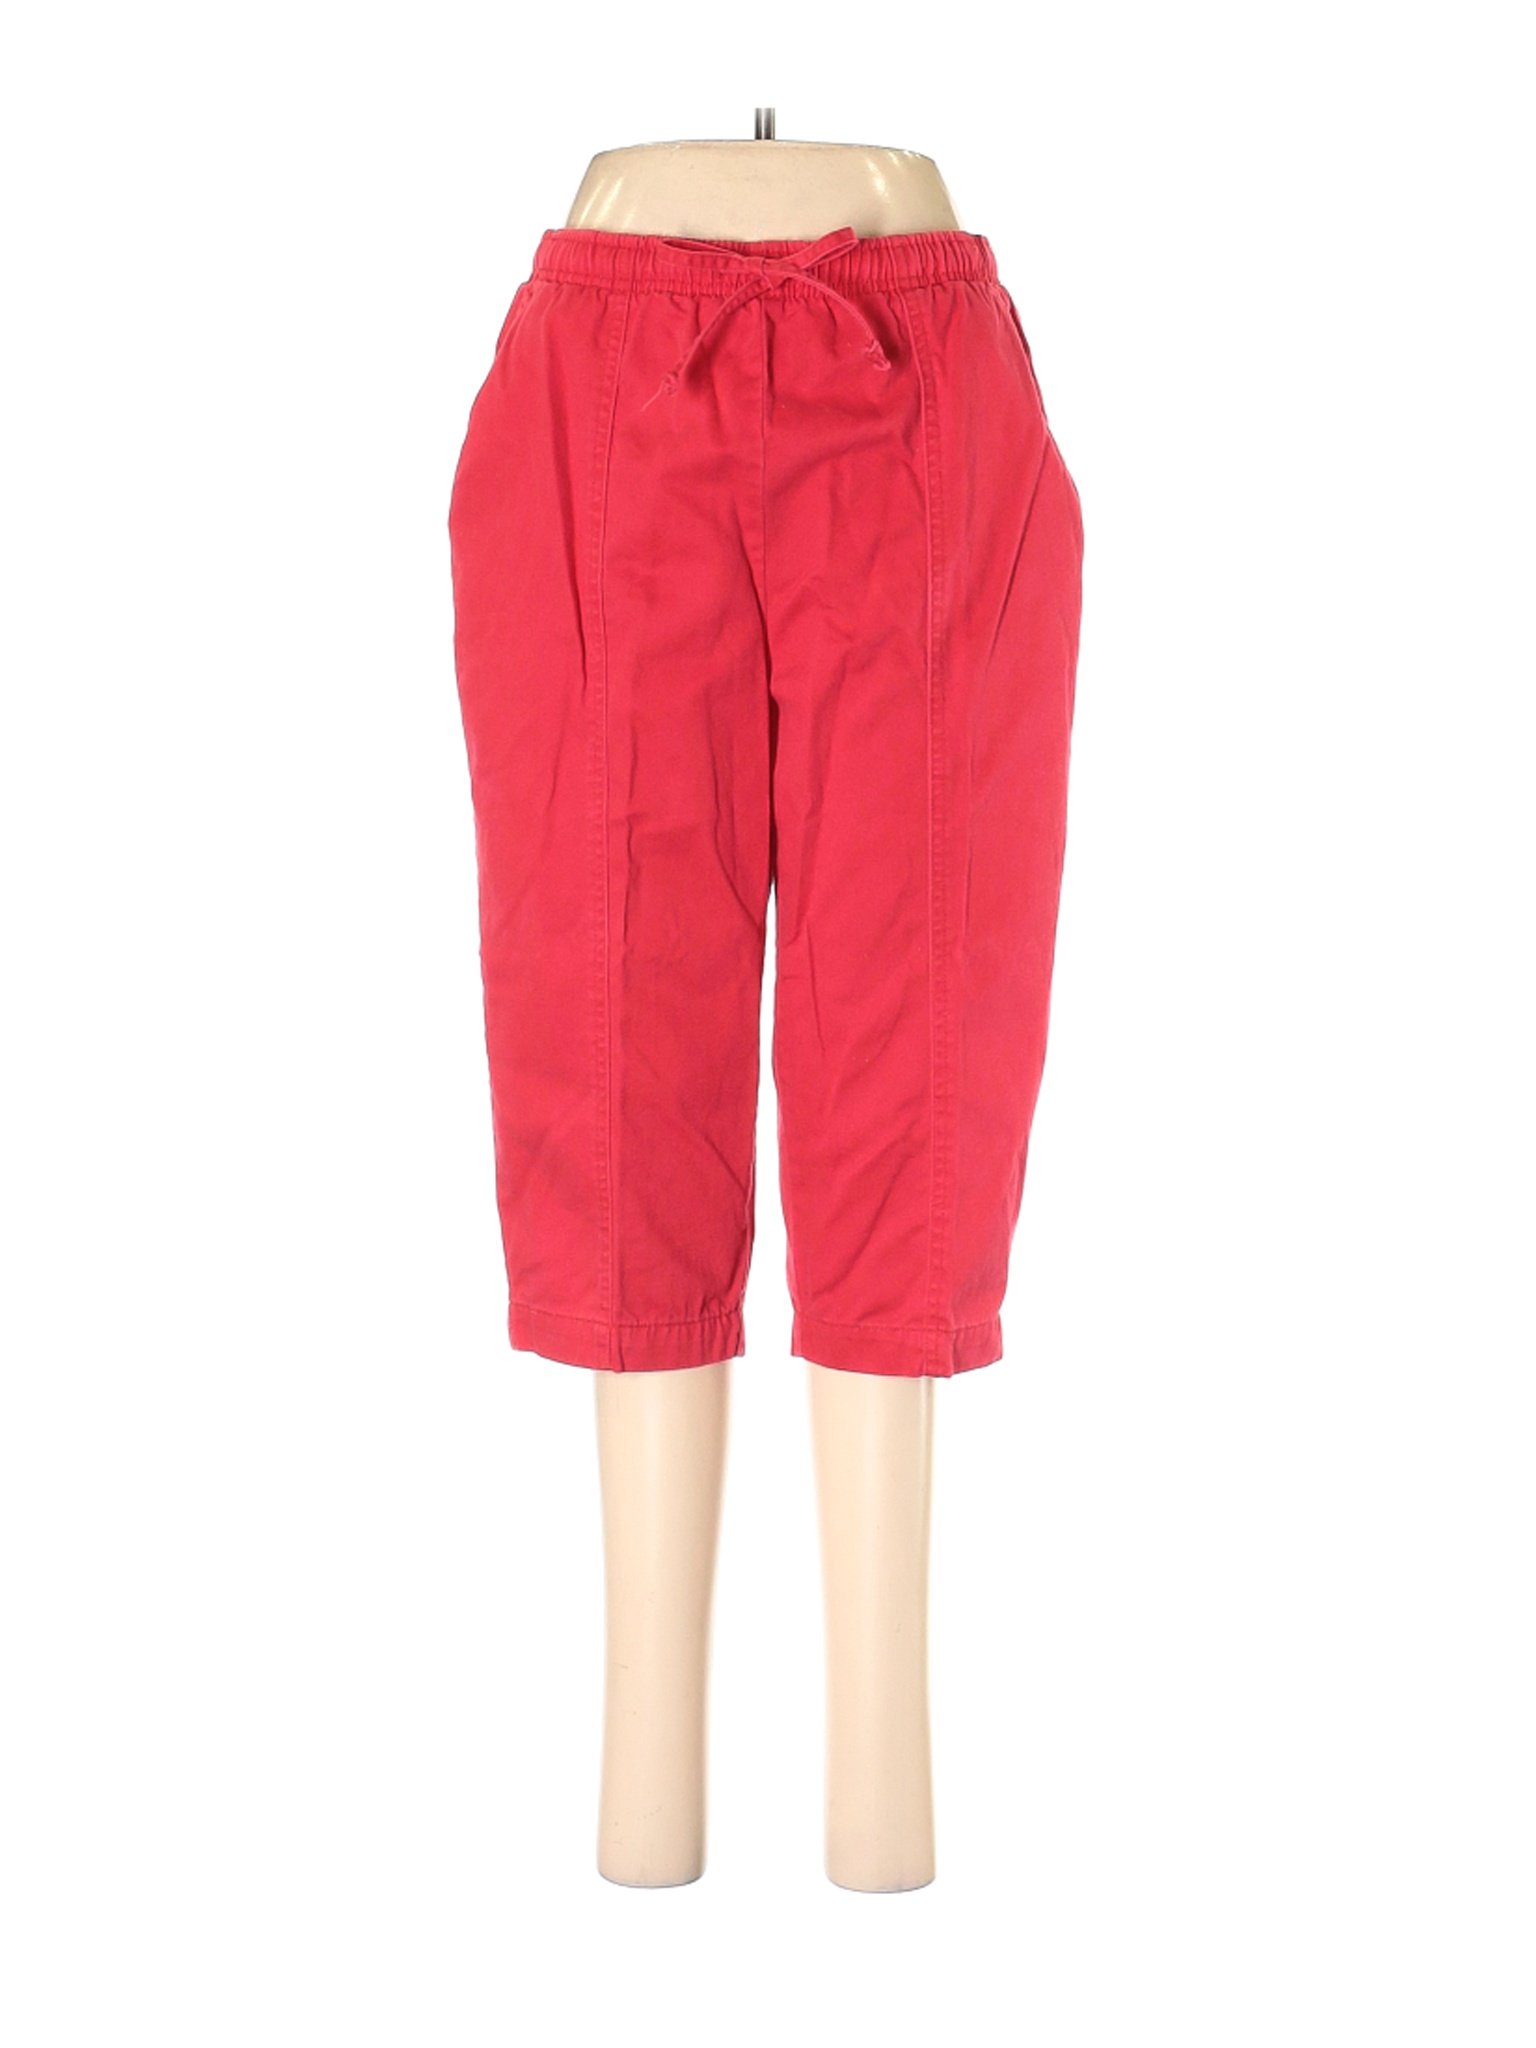 BFA Classics Women Red Casual Pants M Petites | eBay